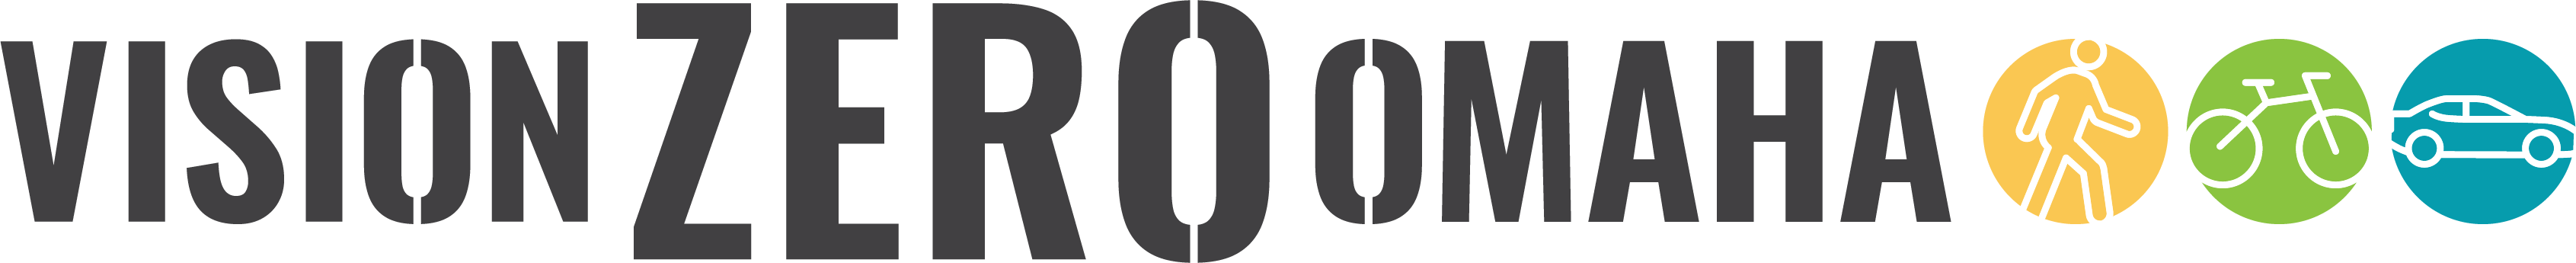 Omaha Vision Zero Logo_Horizontal (2).png